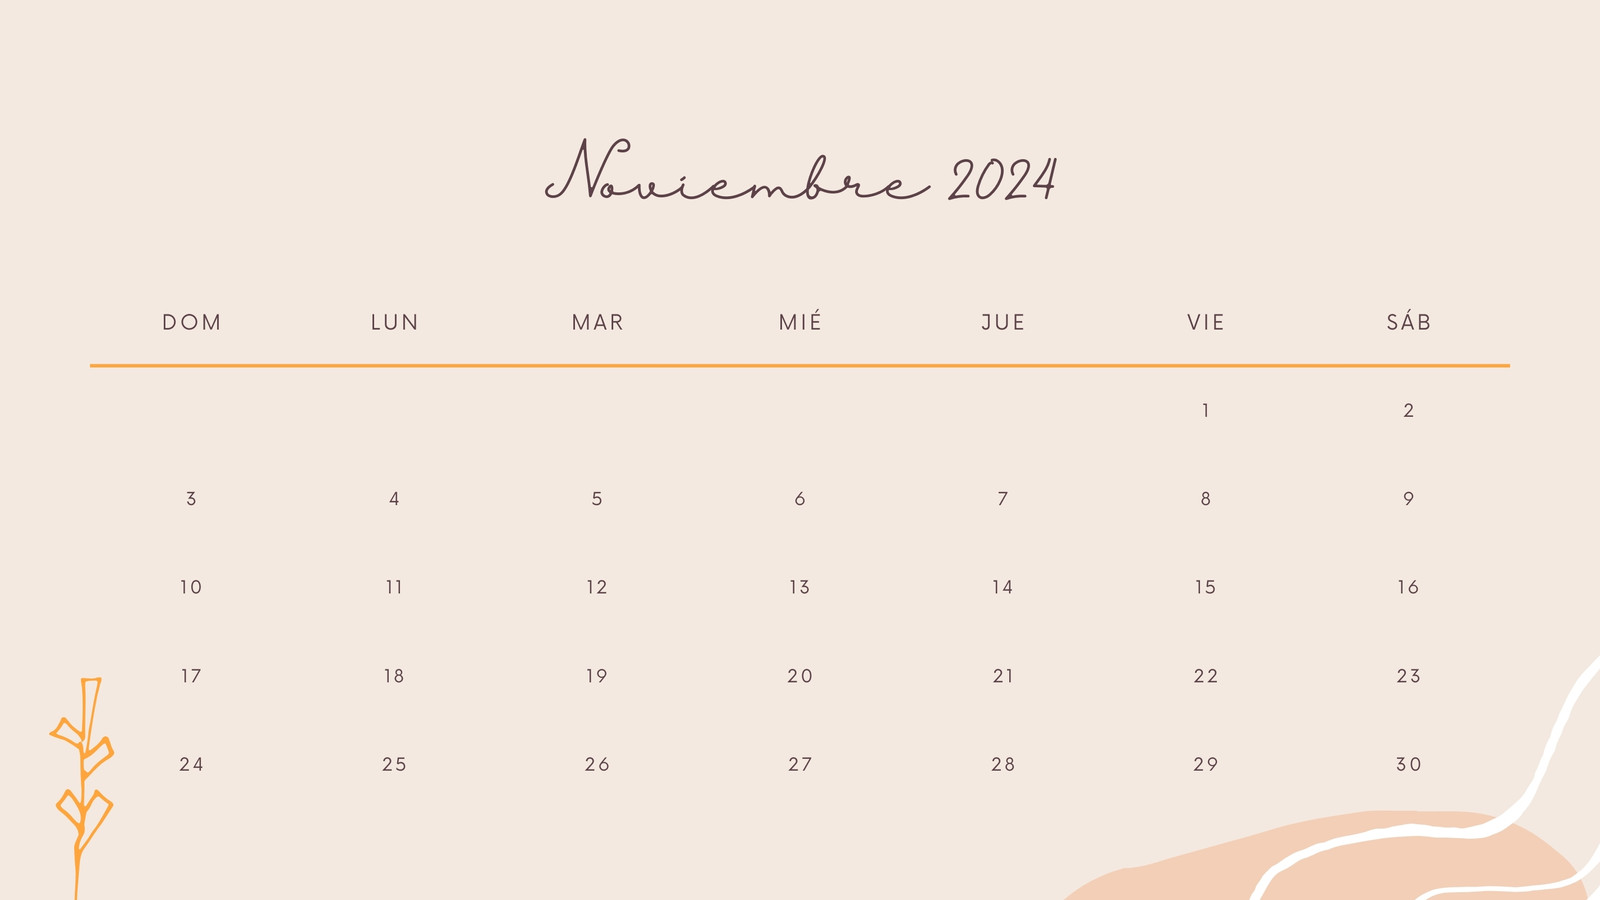 Calendario Mensual en Naranja estilo Orgánico